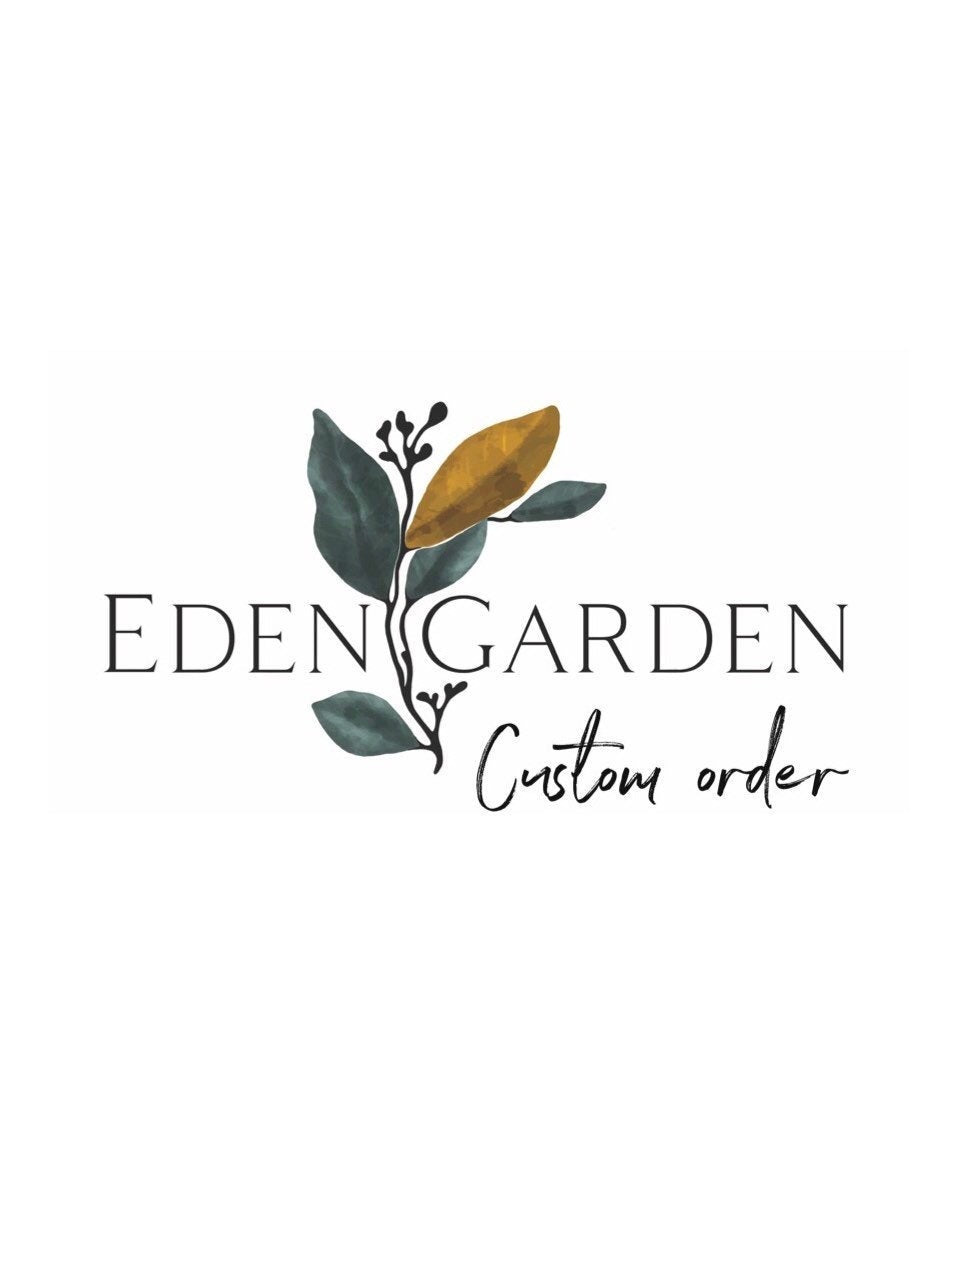 Rush order upgrade - Eden Garden Jewelry™